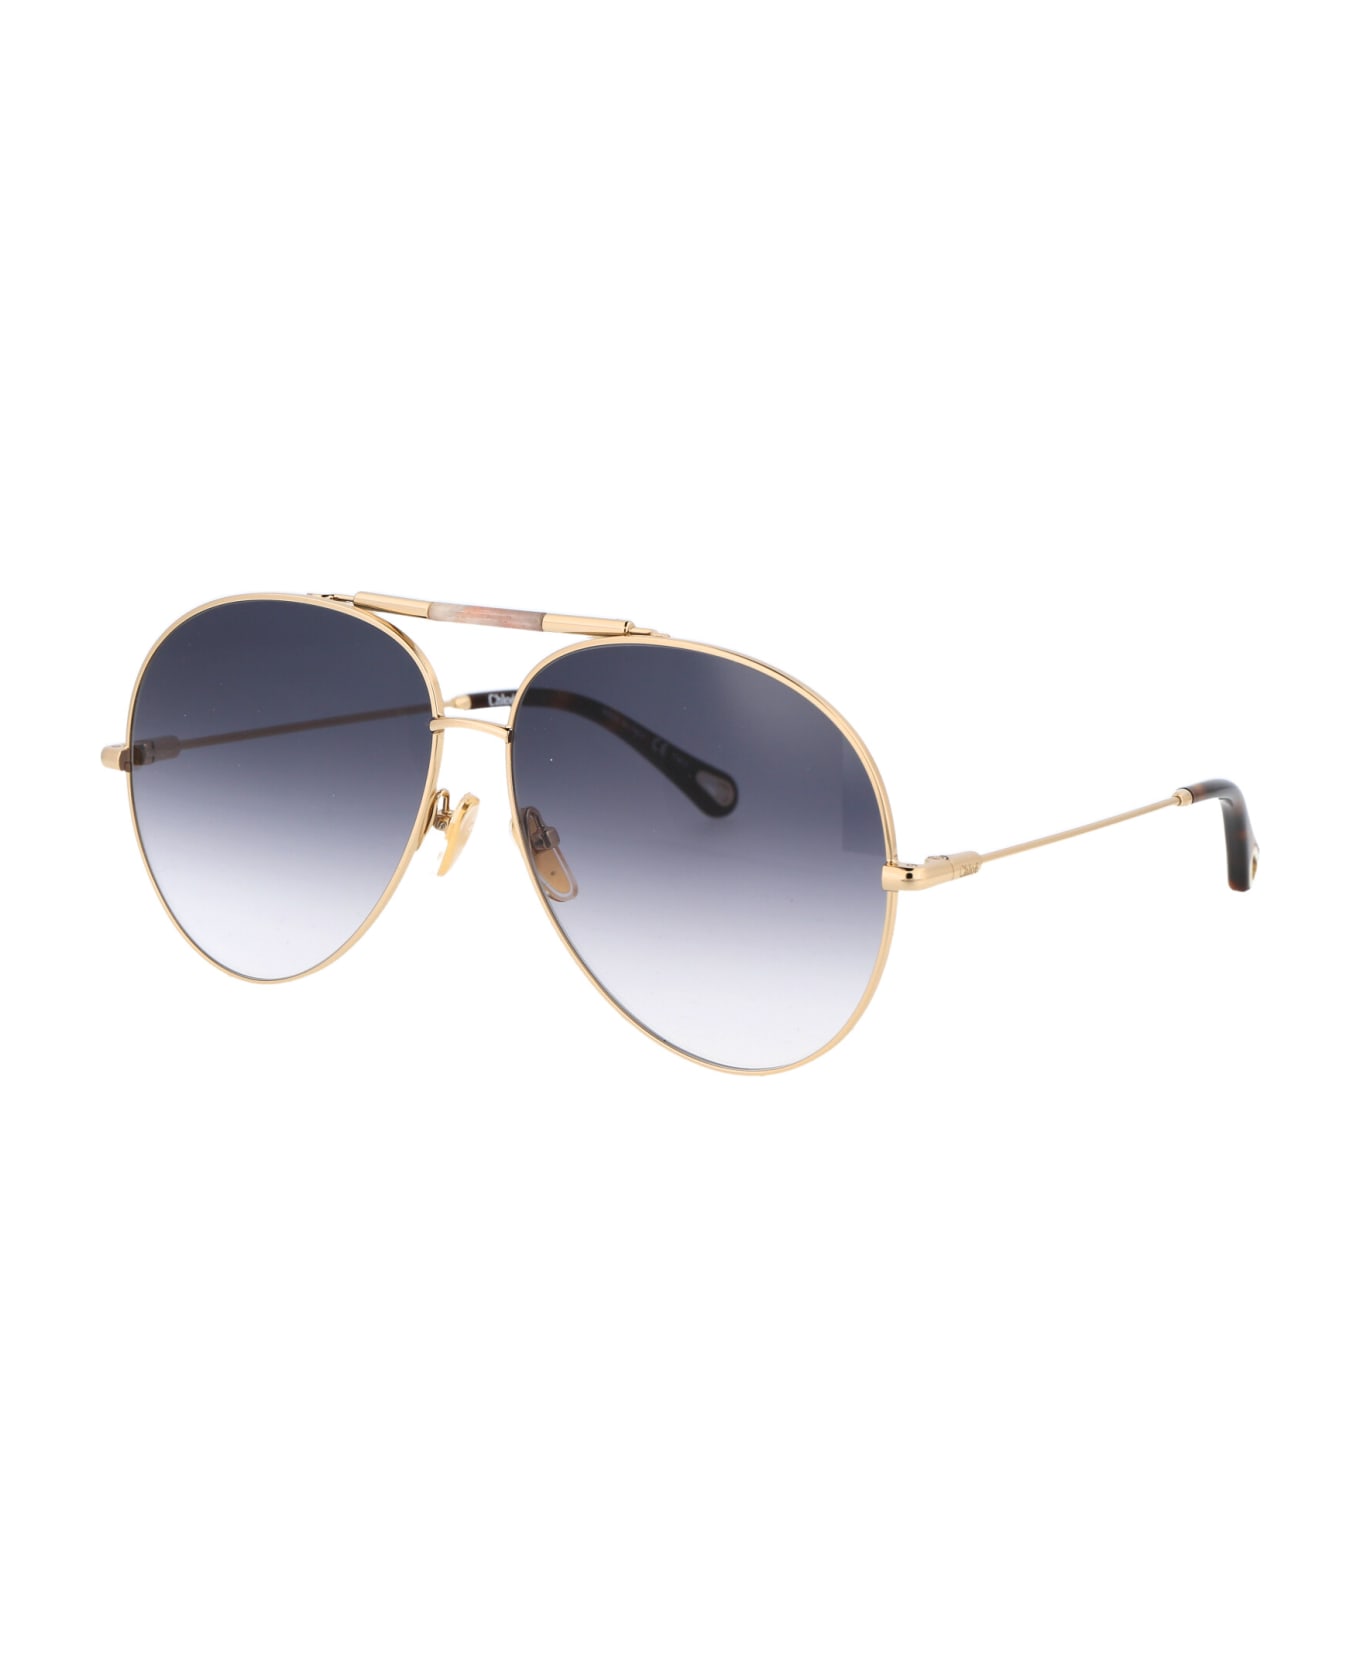 Chloé Eyewear Ch0113s Sunglasses - 001 GOLD GOLD BLUE サングラス